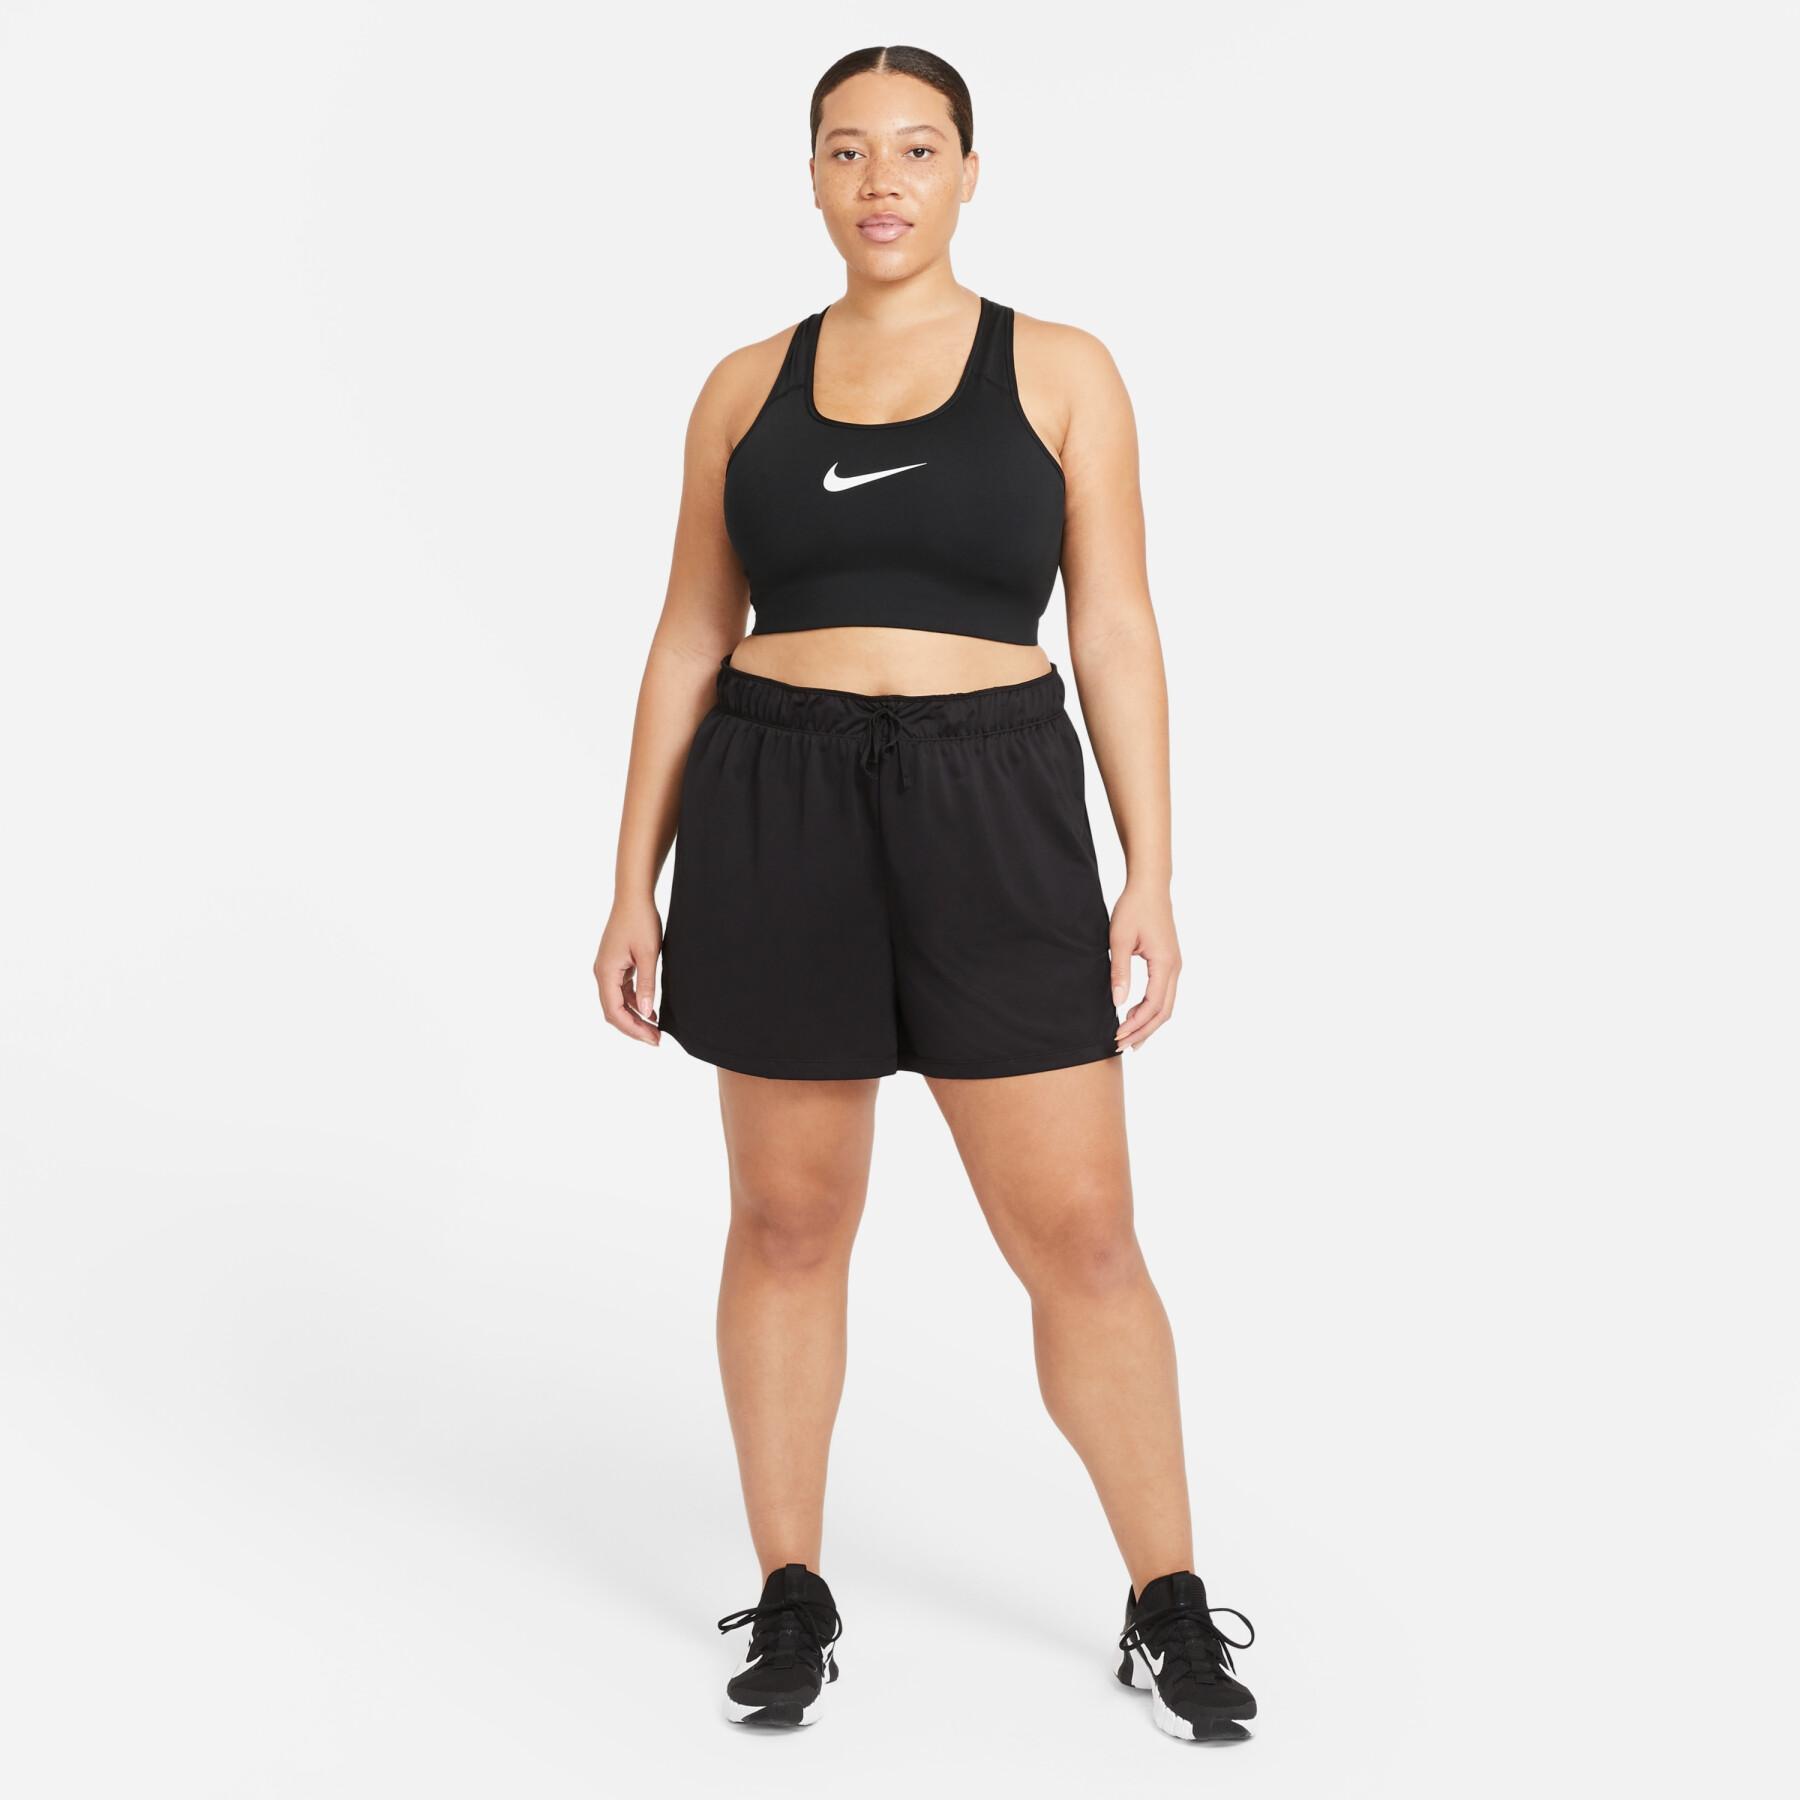 Women's shorts Nike dri-fit attack